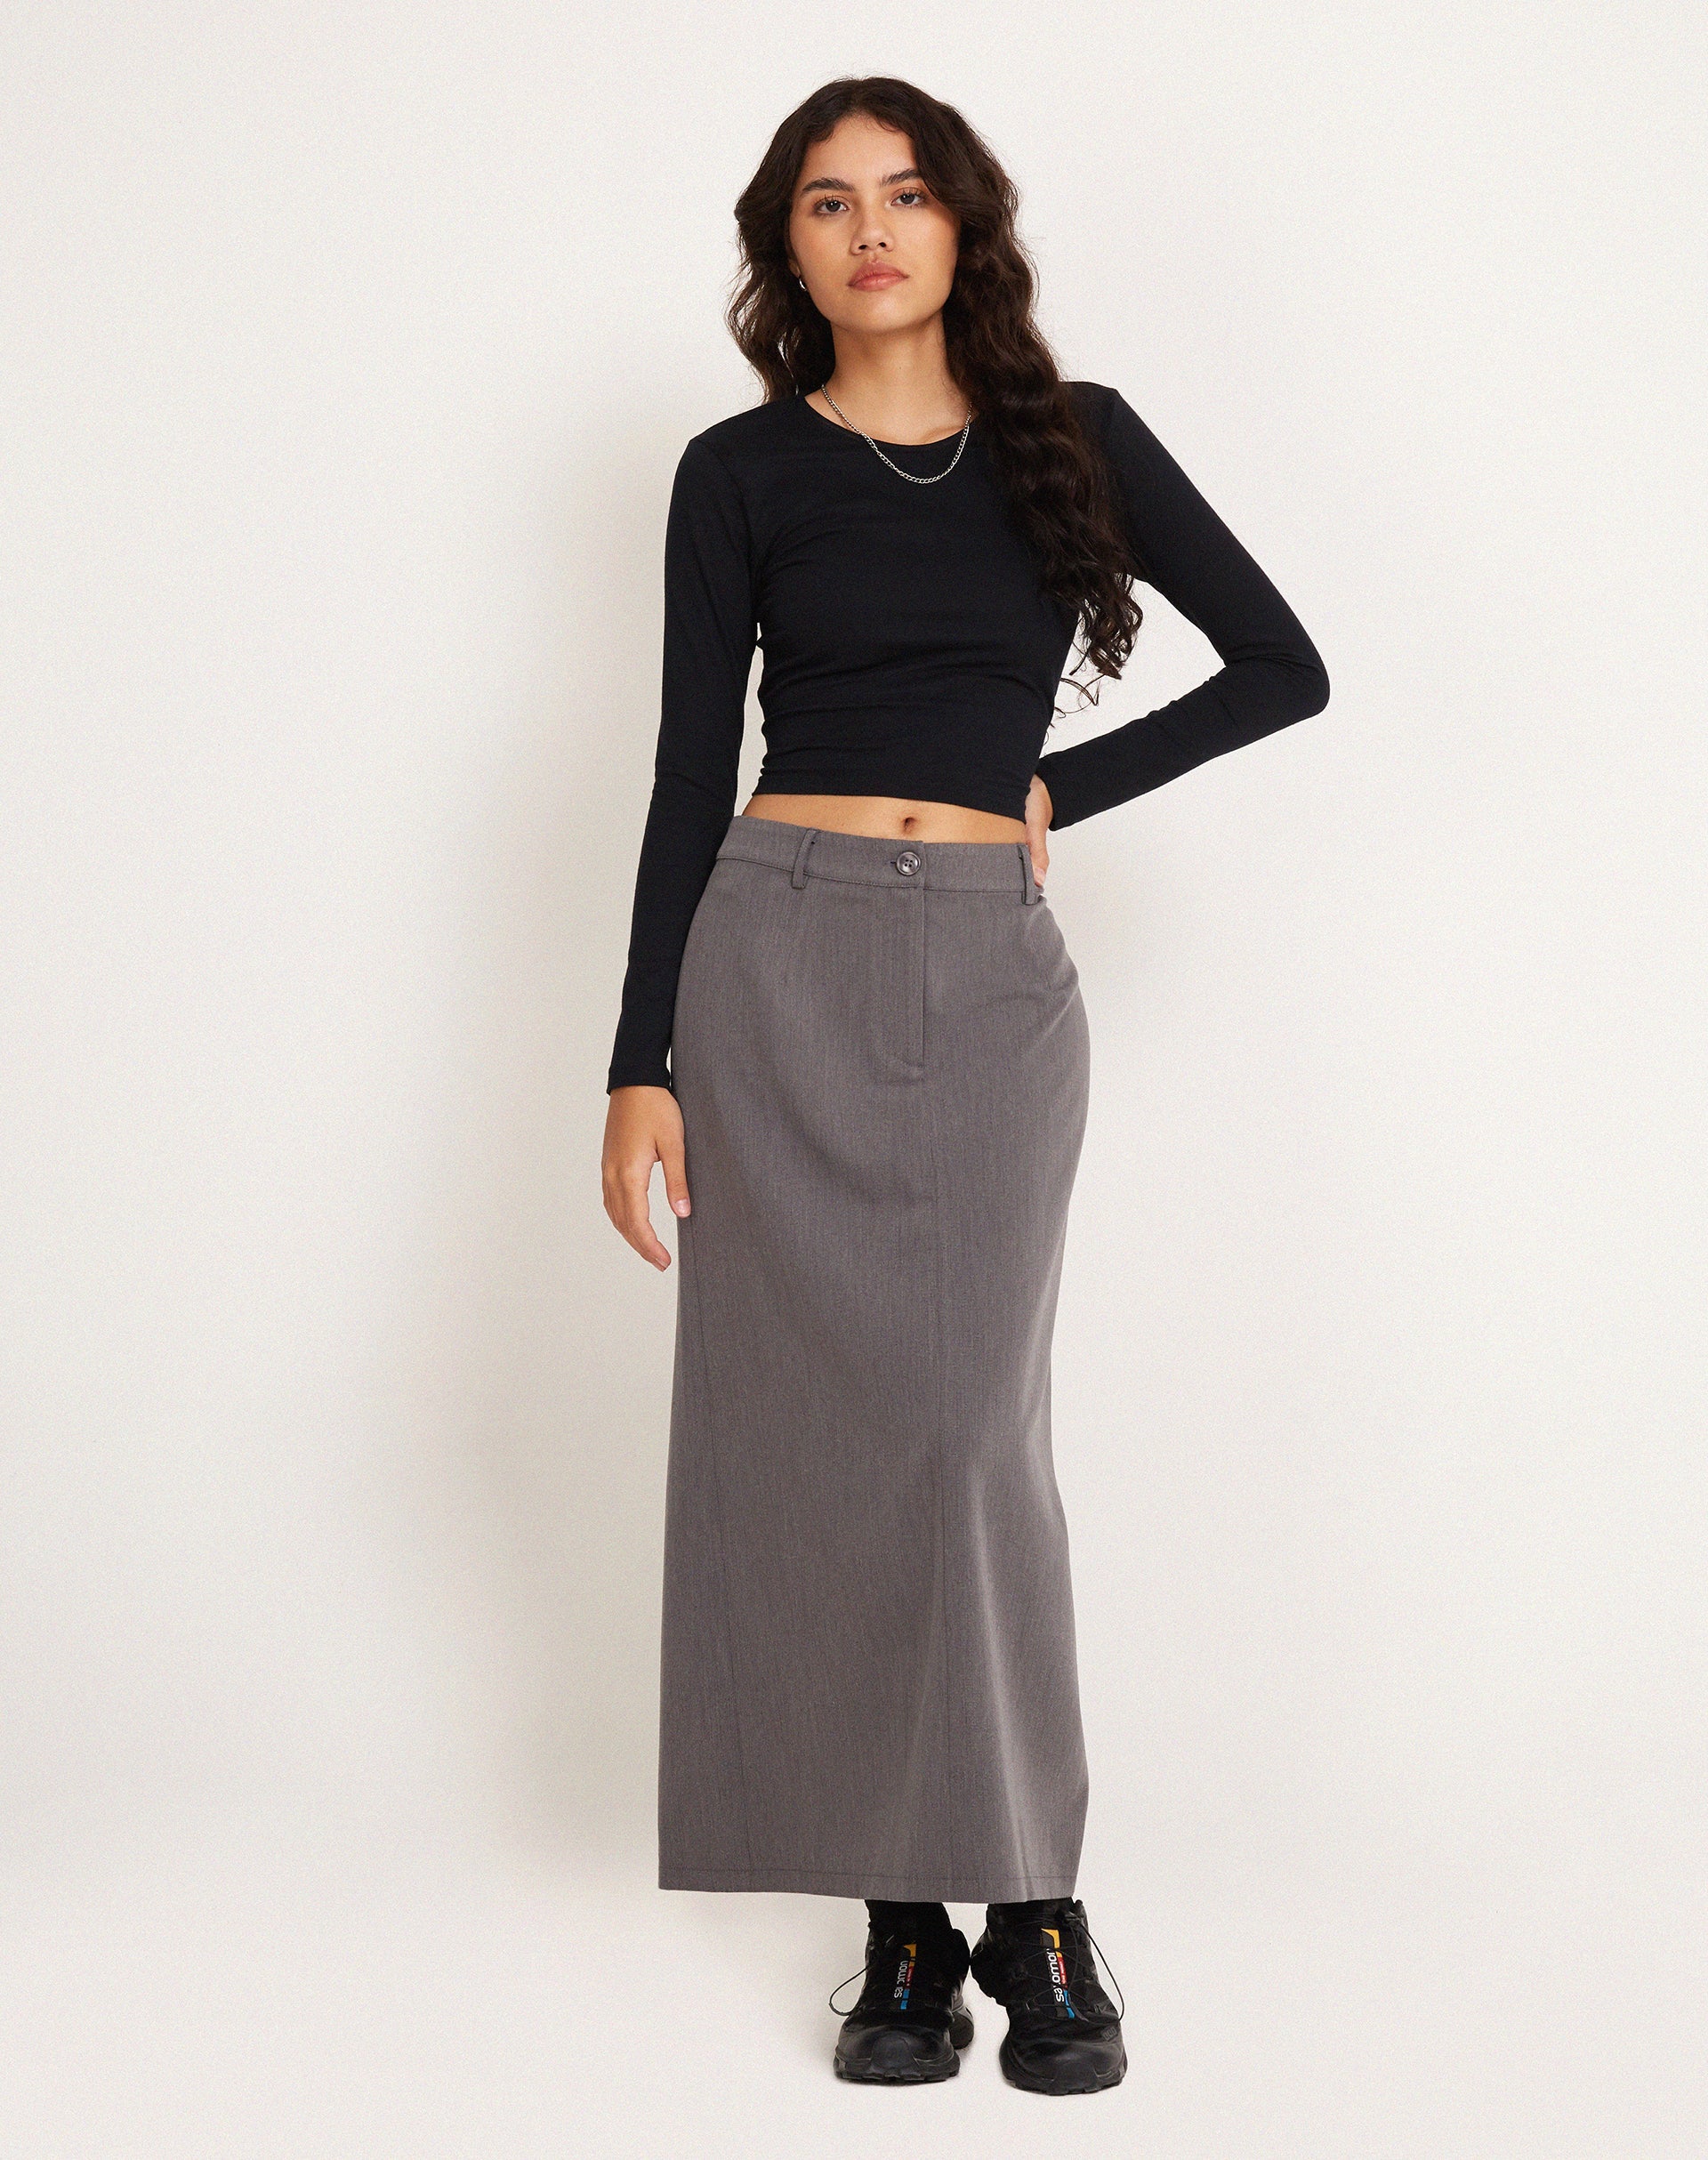 Image of Lanula Midi Skirt in Tailoring Charcoal